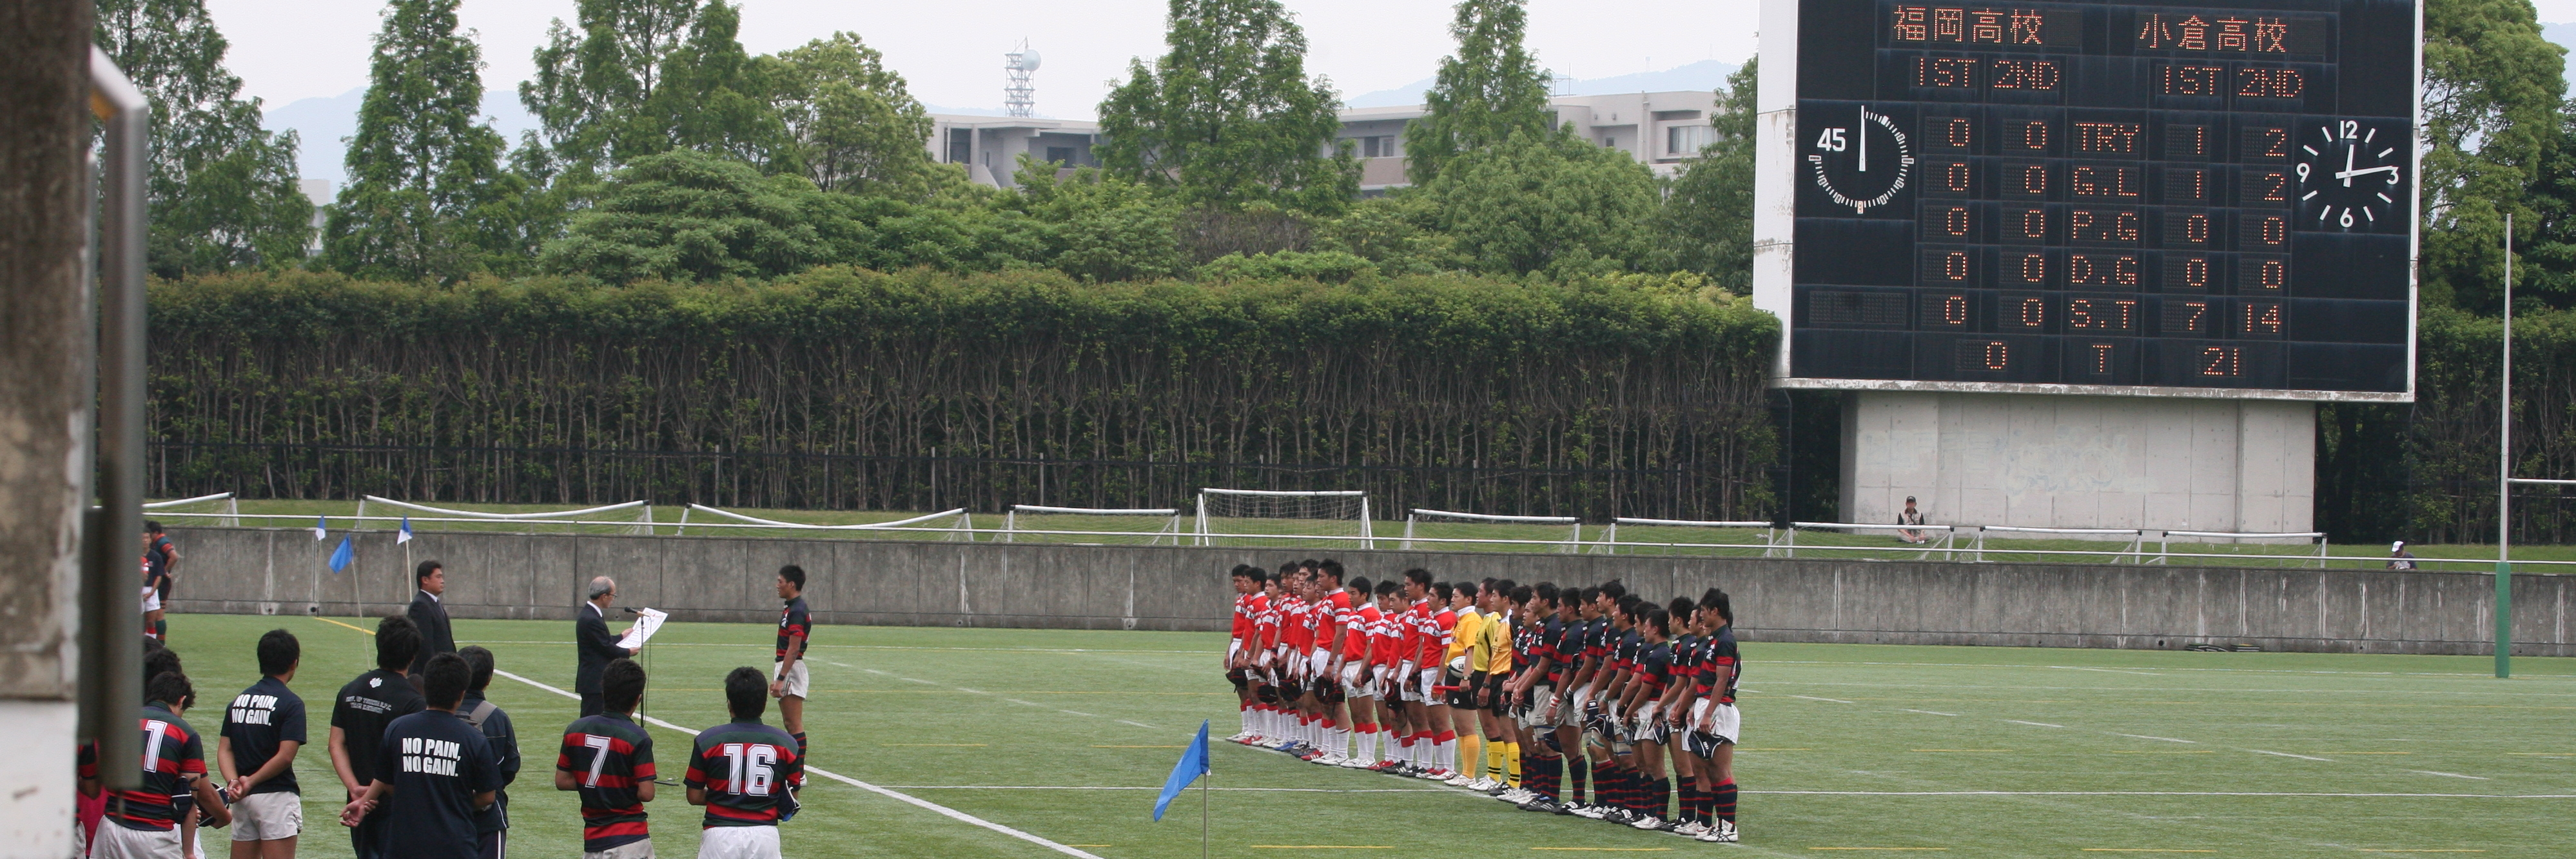 http://kokura-rugby.sakura.ne.jp/2011.6.5-20-D.JPG